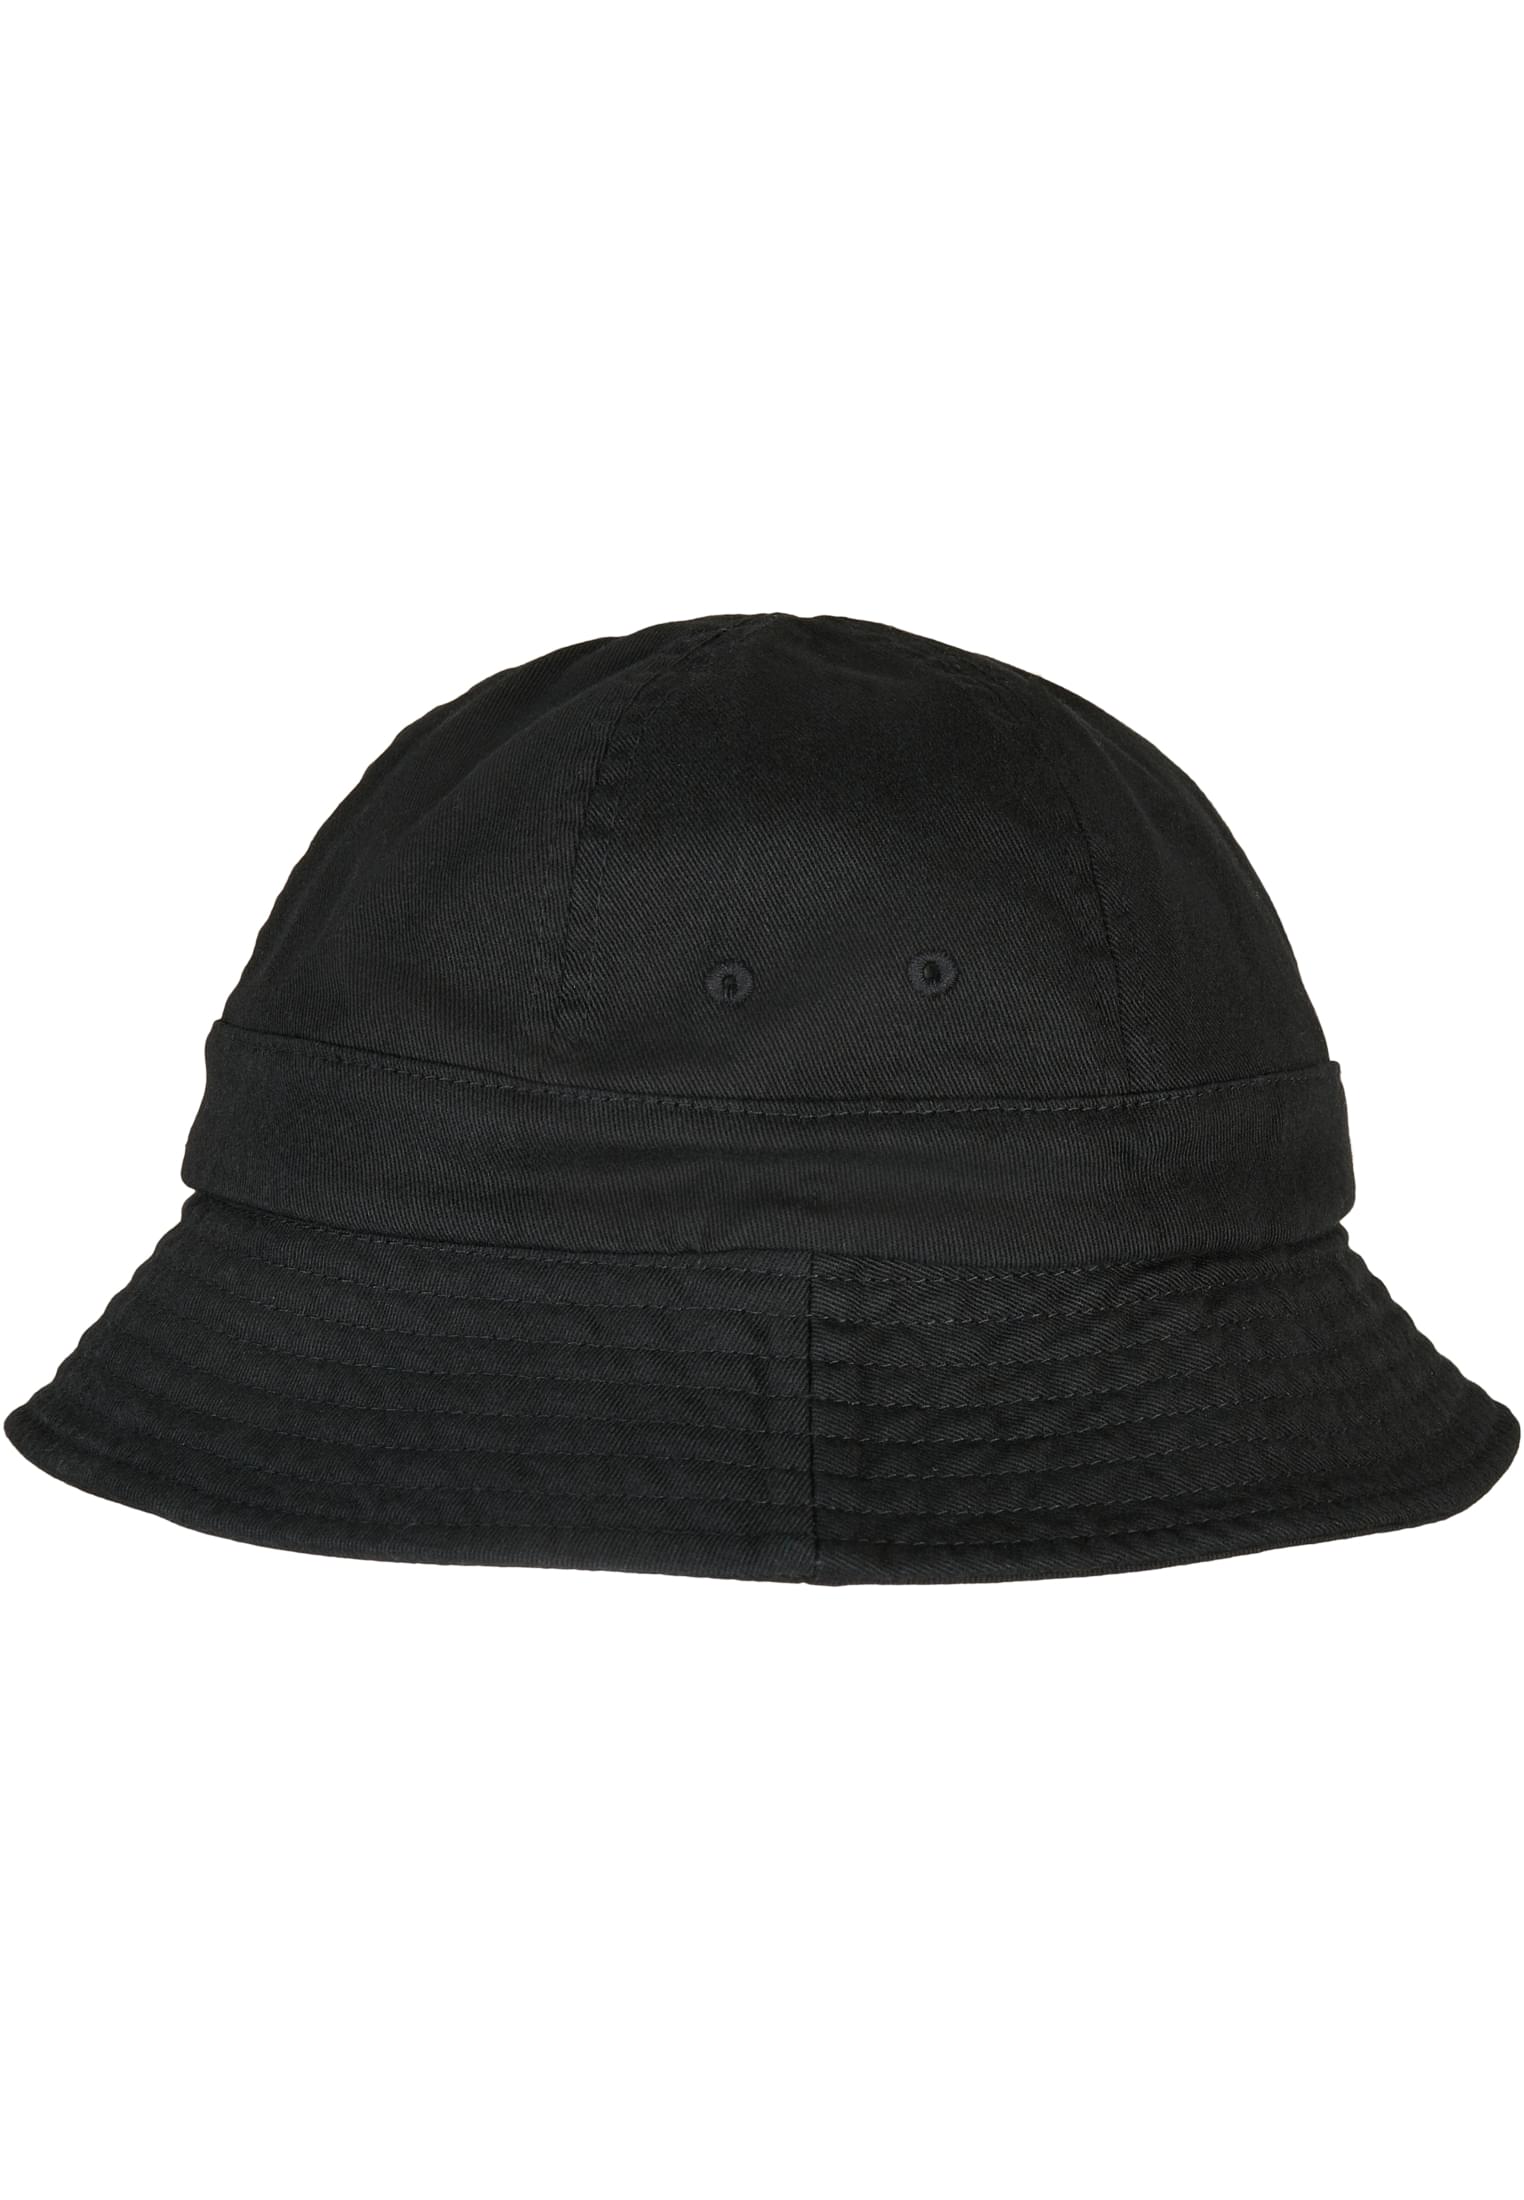 Flexfit Eco Washing Flexfit Notop Tennis Hat in Farbe black